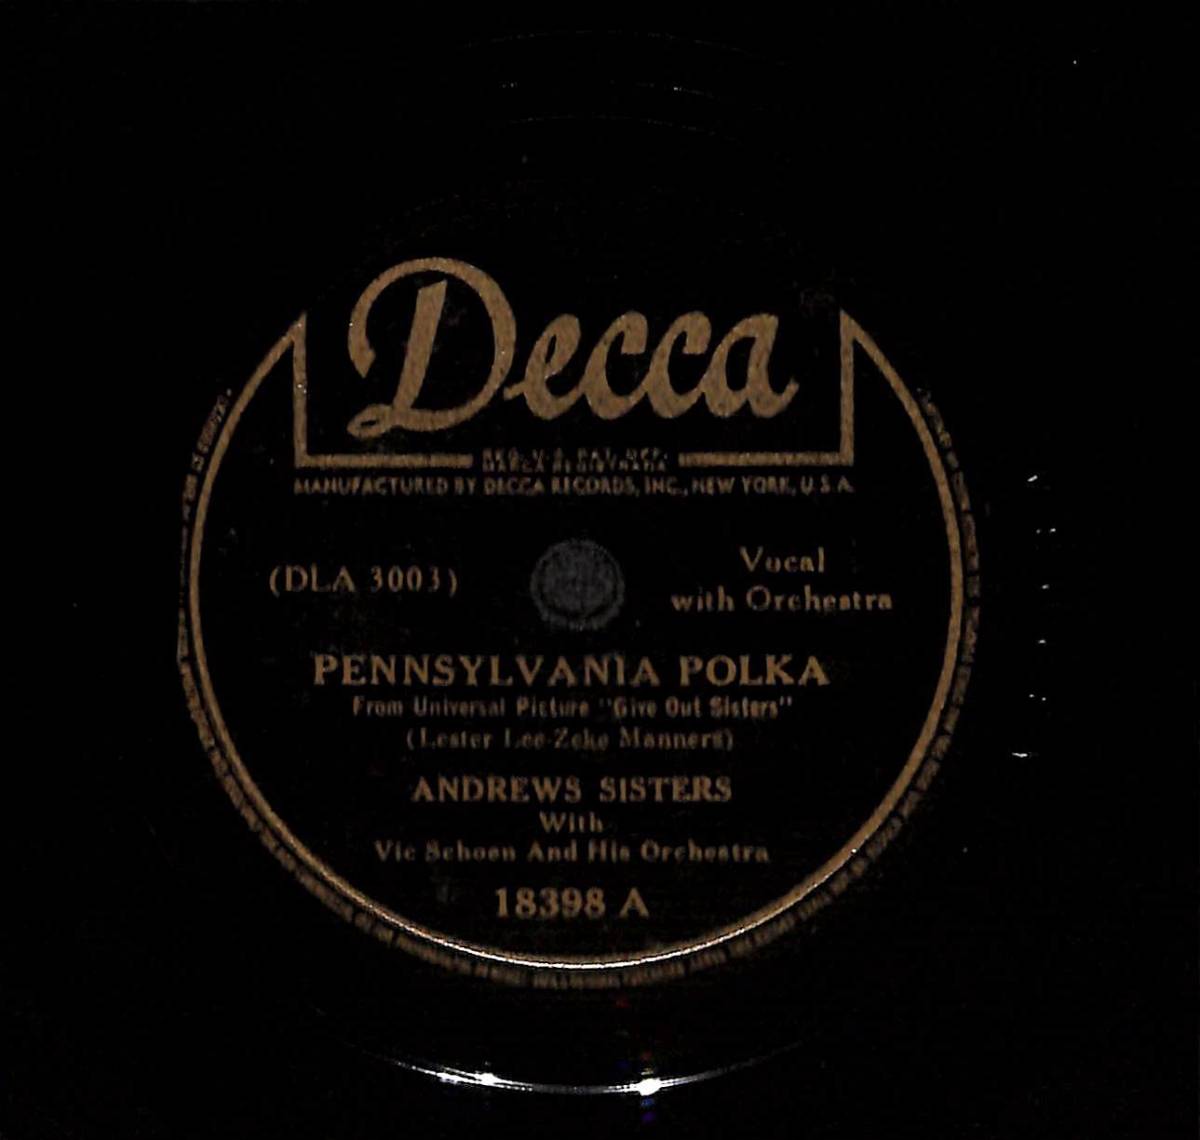 IM062/JAZZ SP/ rice /Decca/Andrews Sisters/Pennsylvania Polka